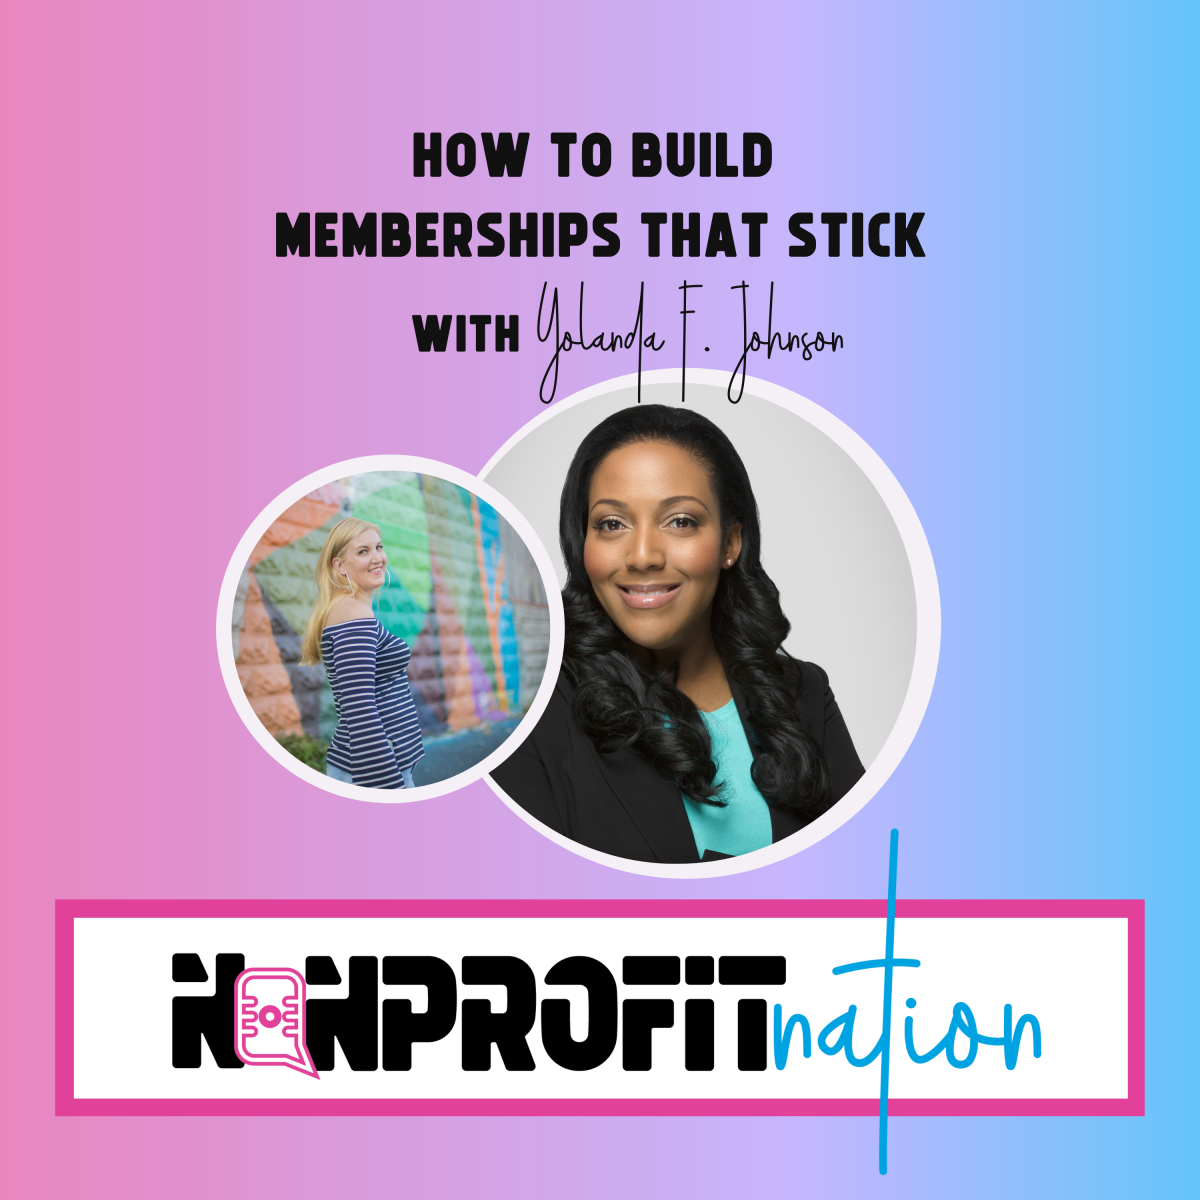 How to Build Nonprofit Memberships That Stick with Yolanda F. Johnson